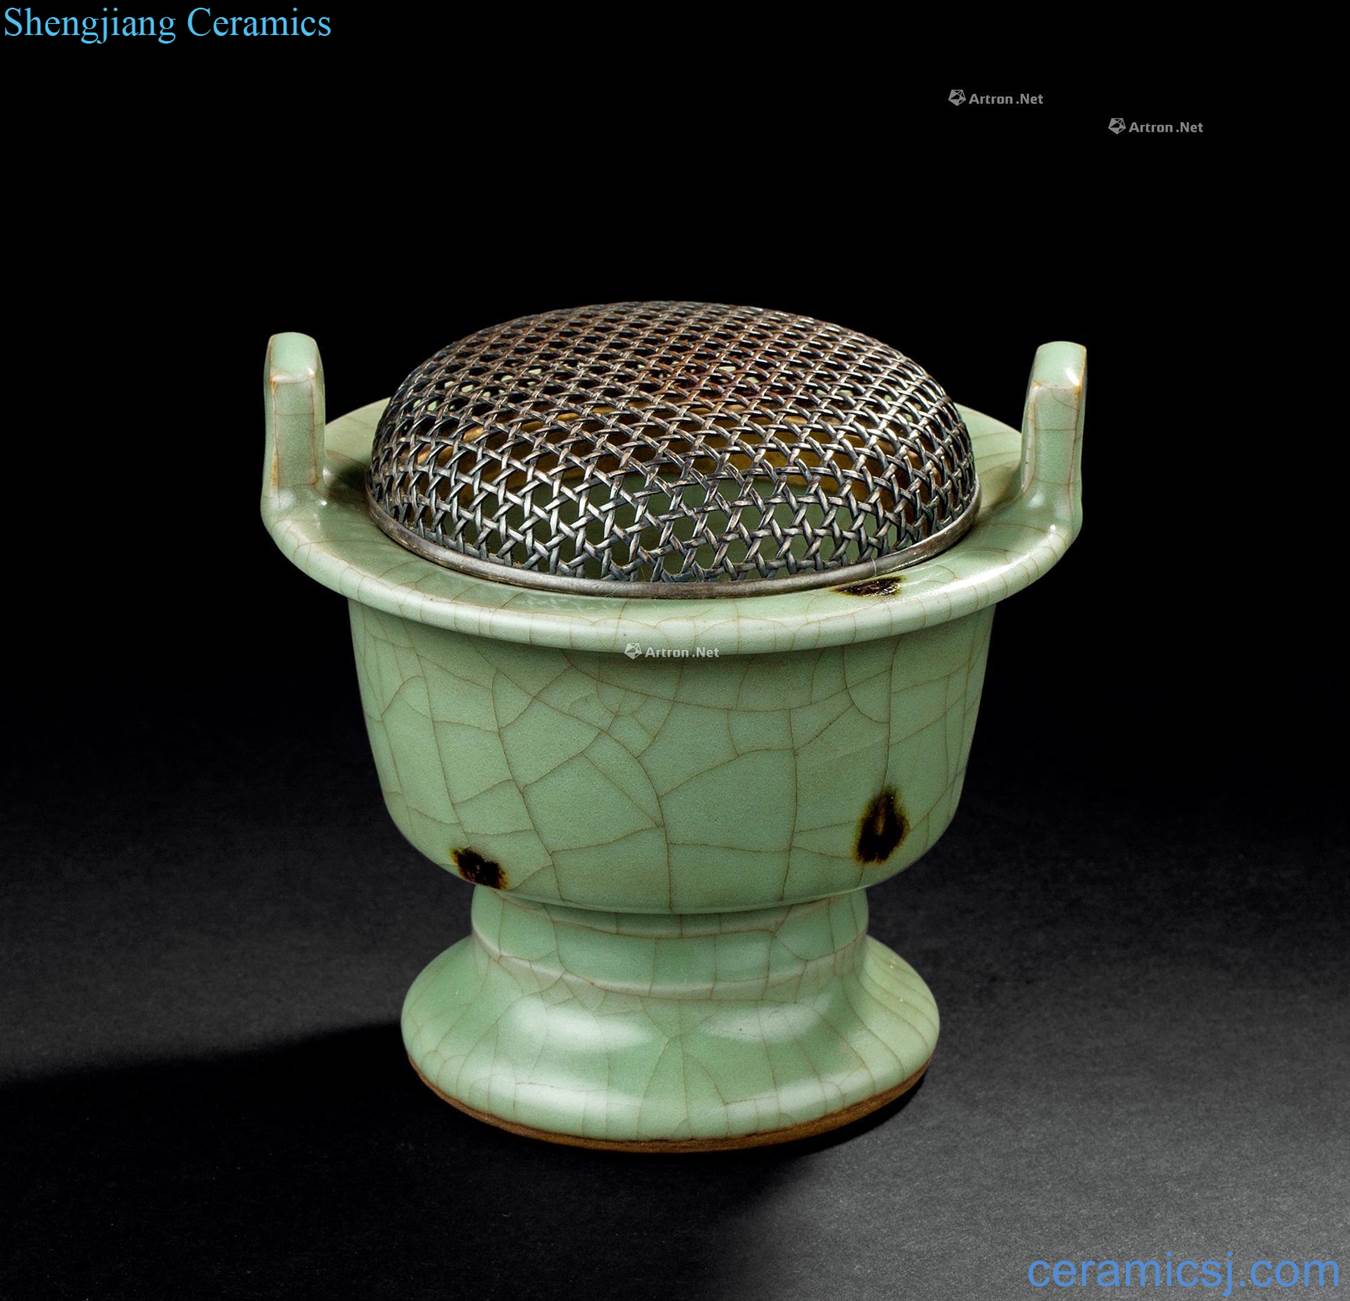 The yuan dynasty (1279-1368) iron spot glaze ears incense burner